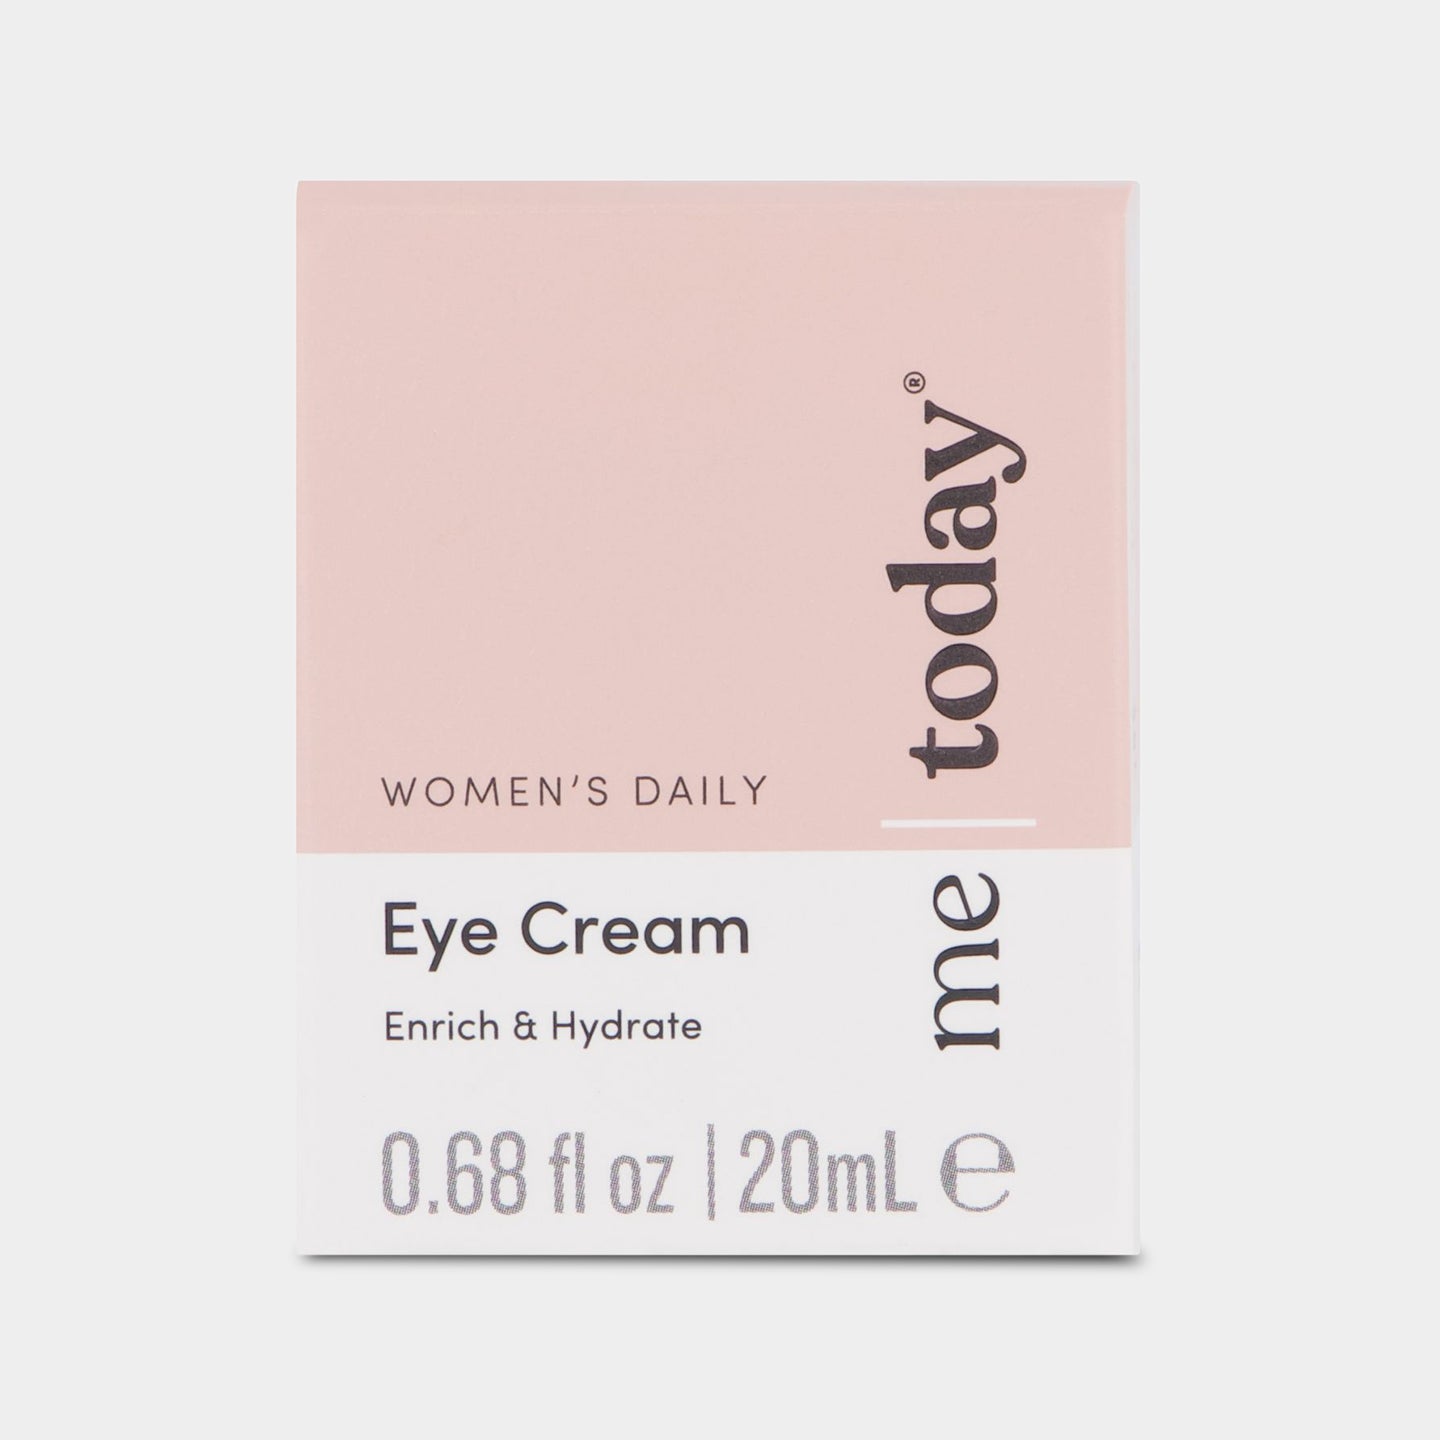 Me Today Women's Daily Eye Cream Skin Care, 20ml | 0.68 fl oz A2